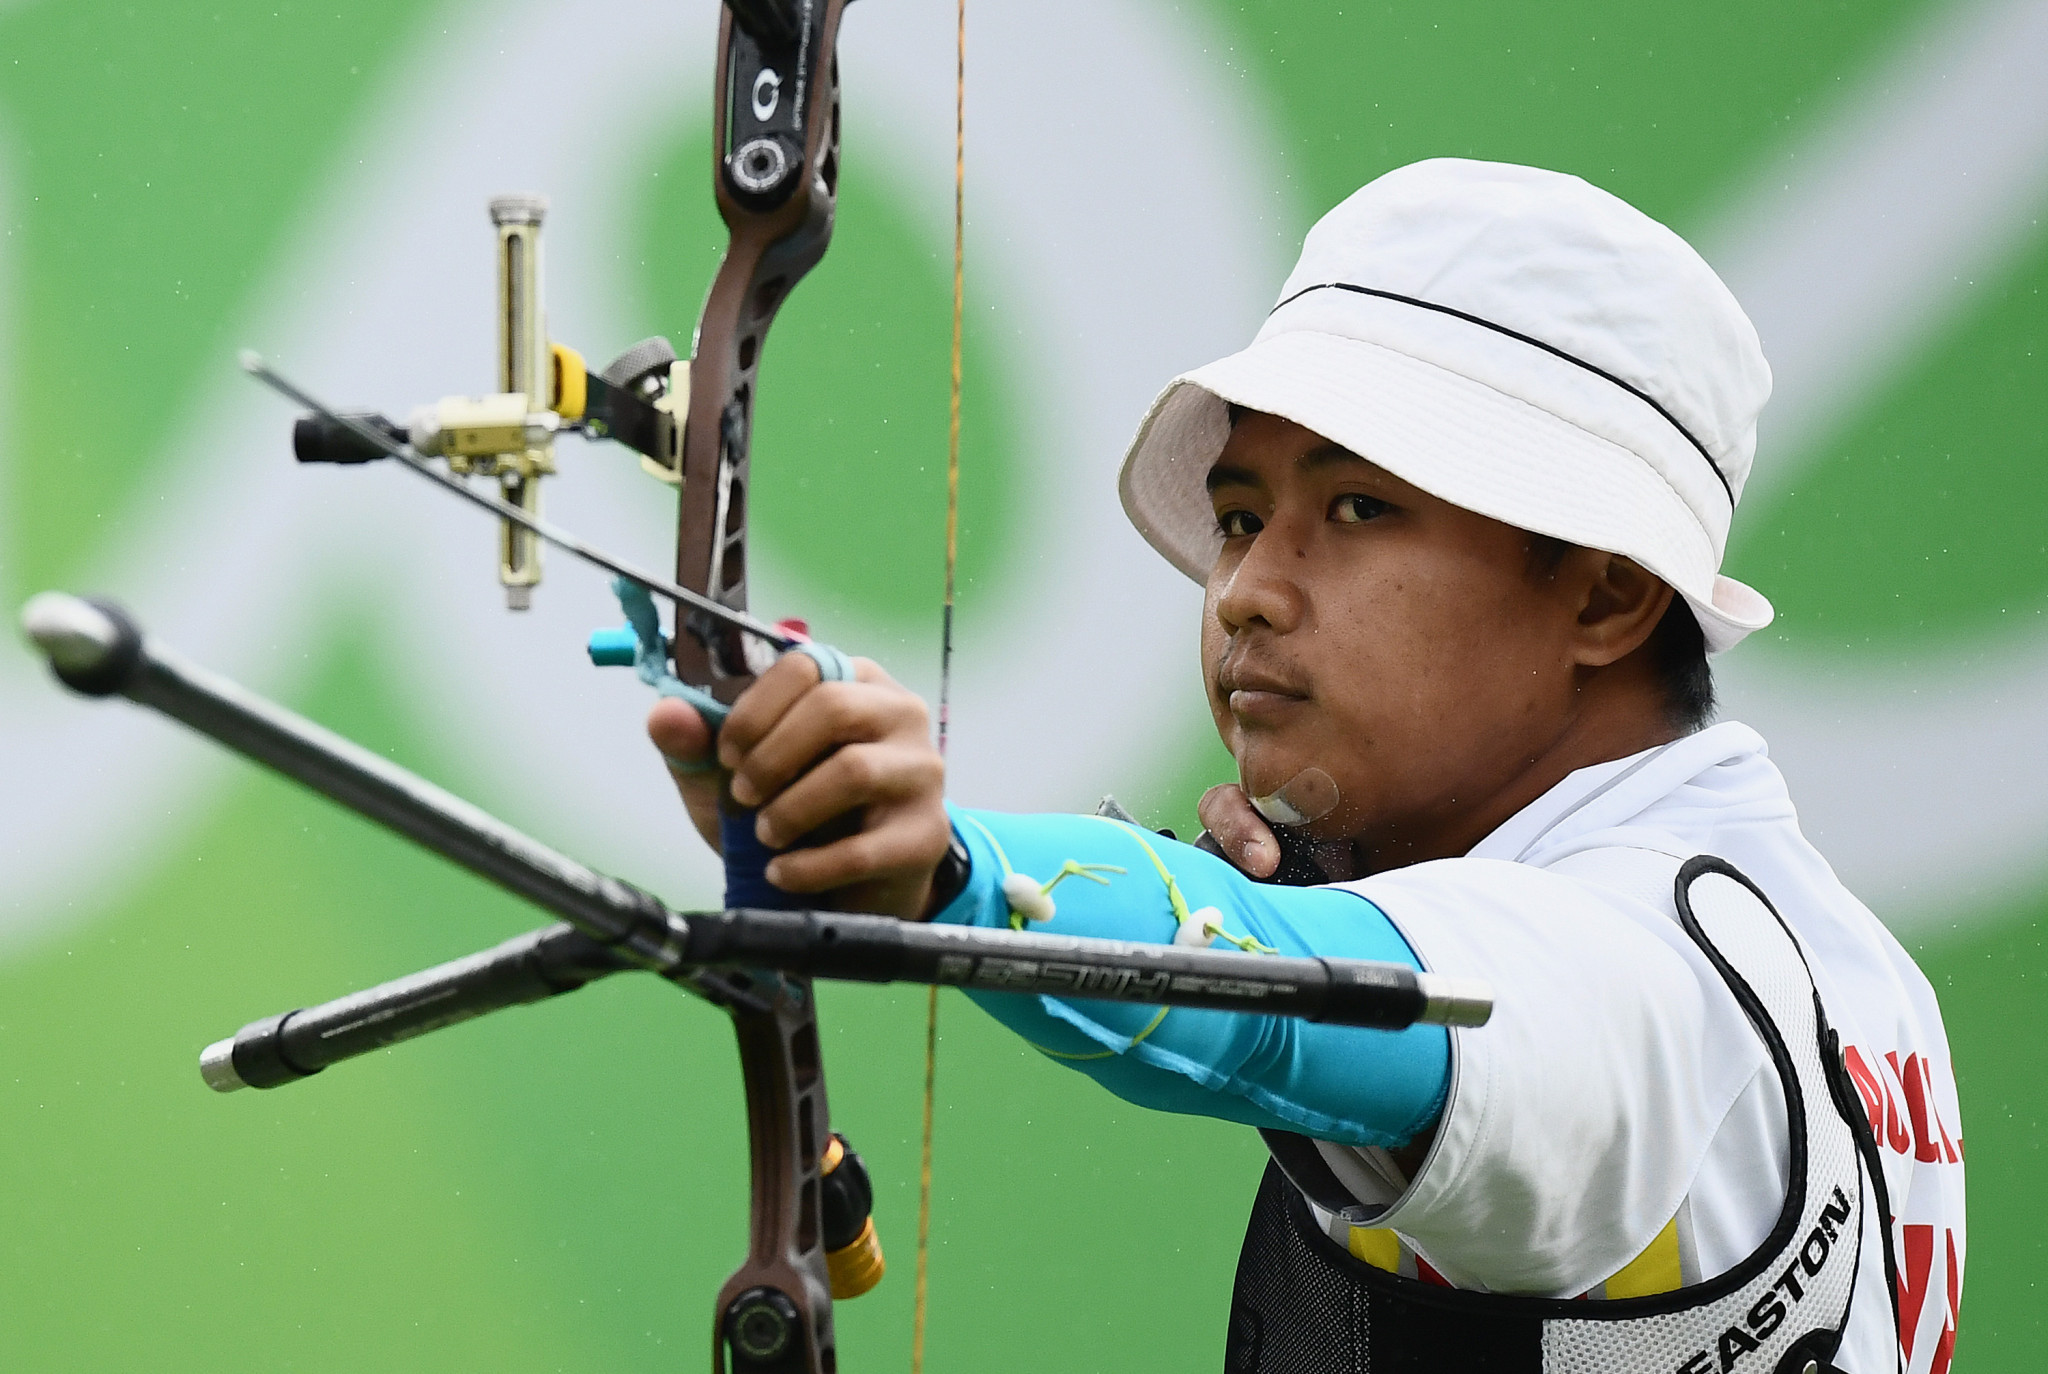 Hosts reach archery final at Asian Games 2018 test event